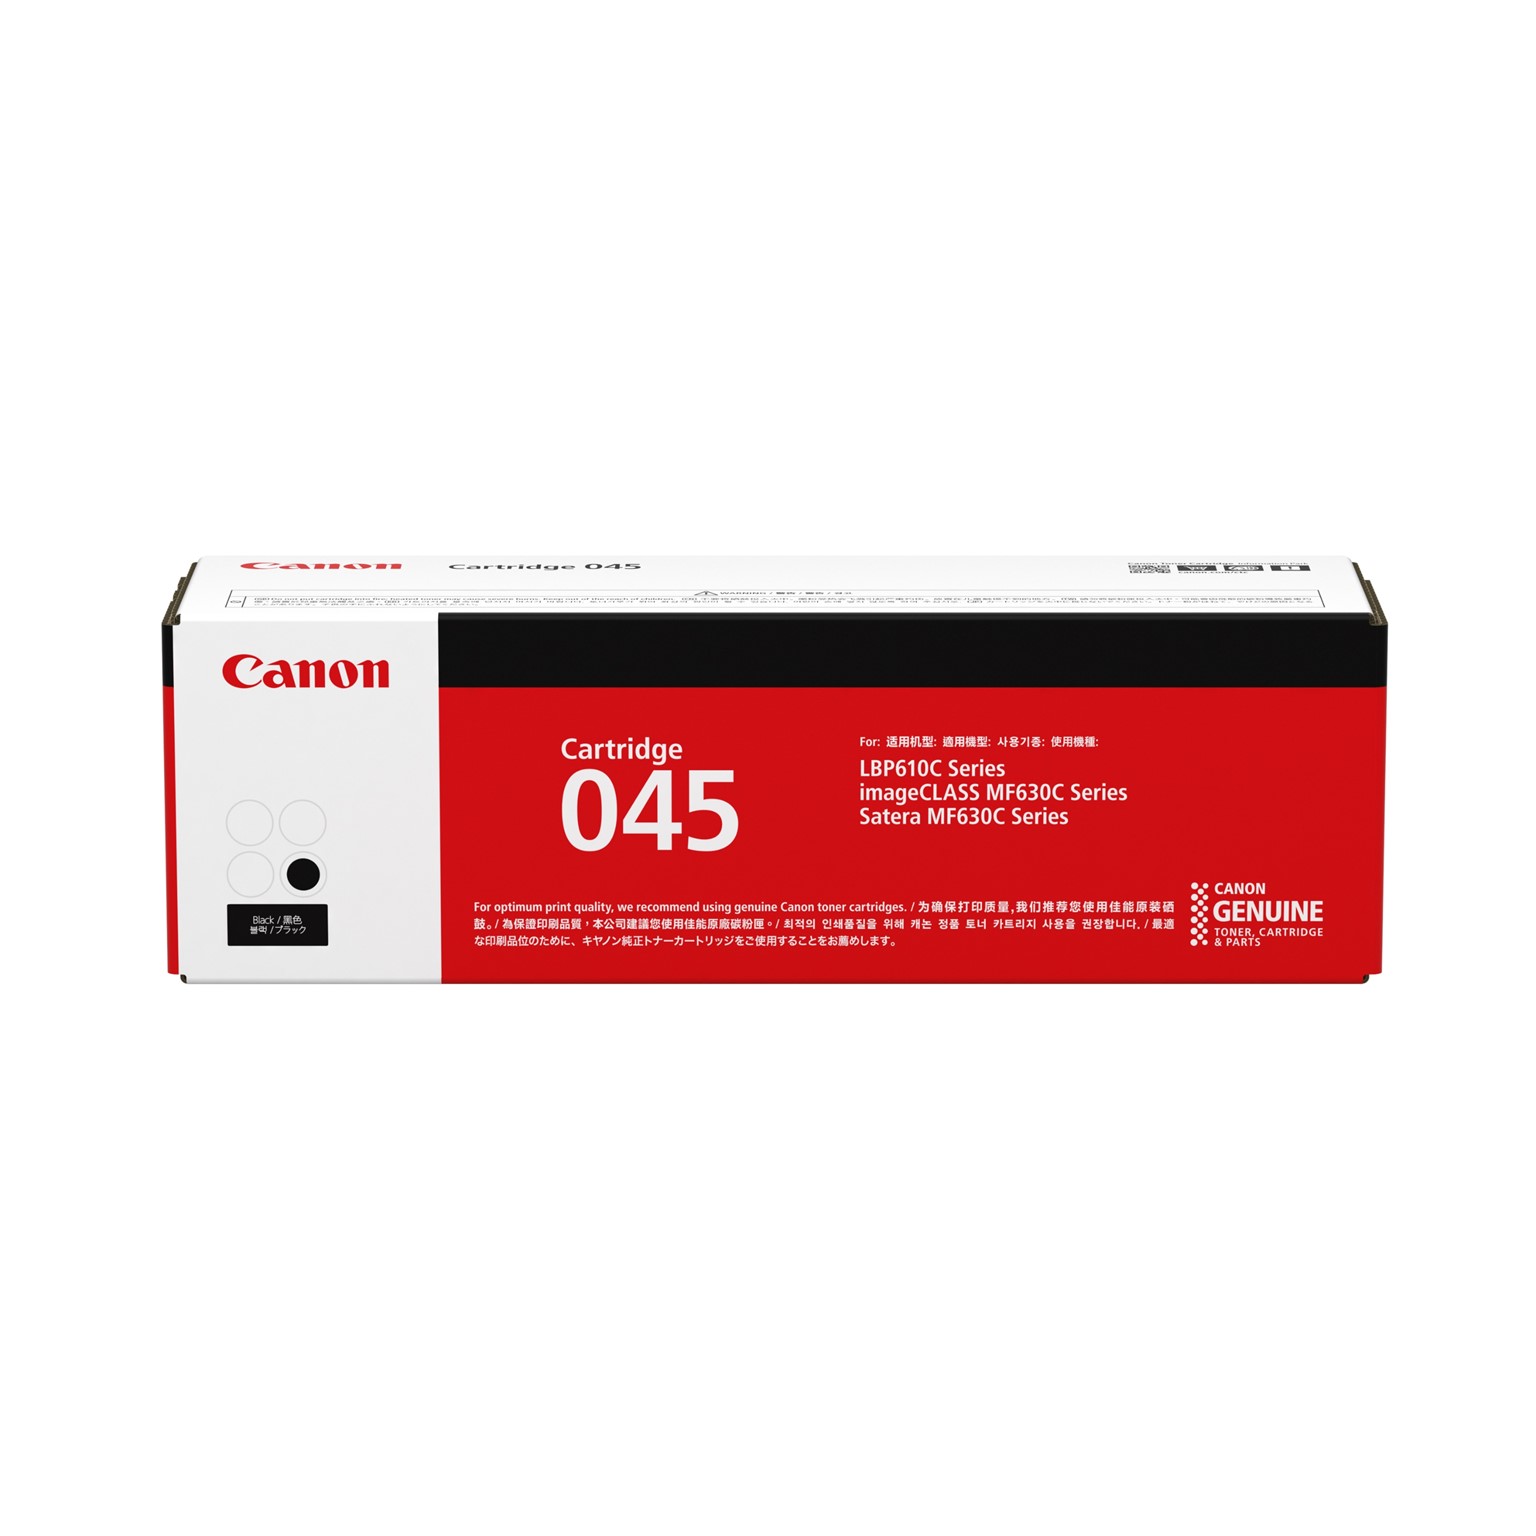 Canon Cartridge-045 Black